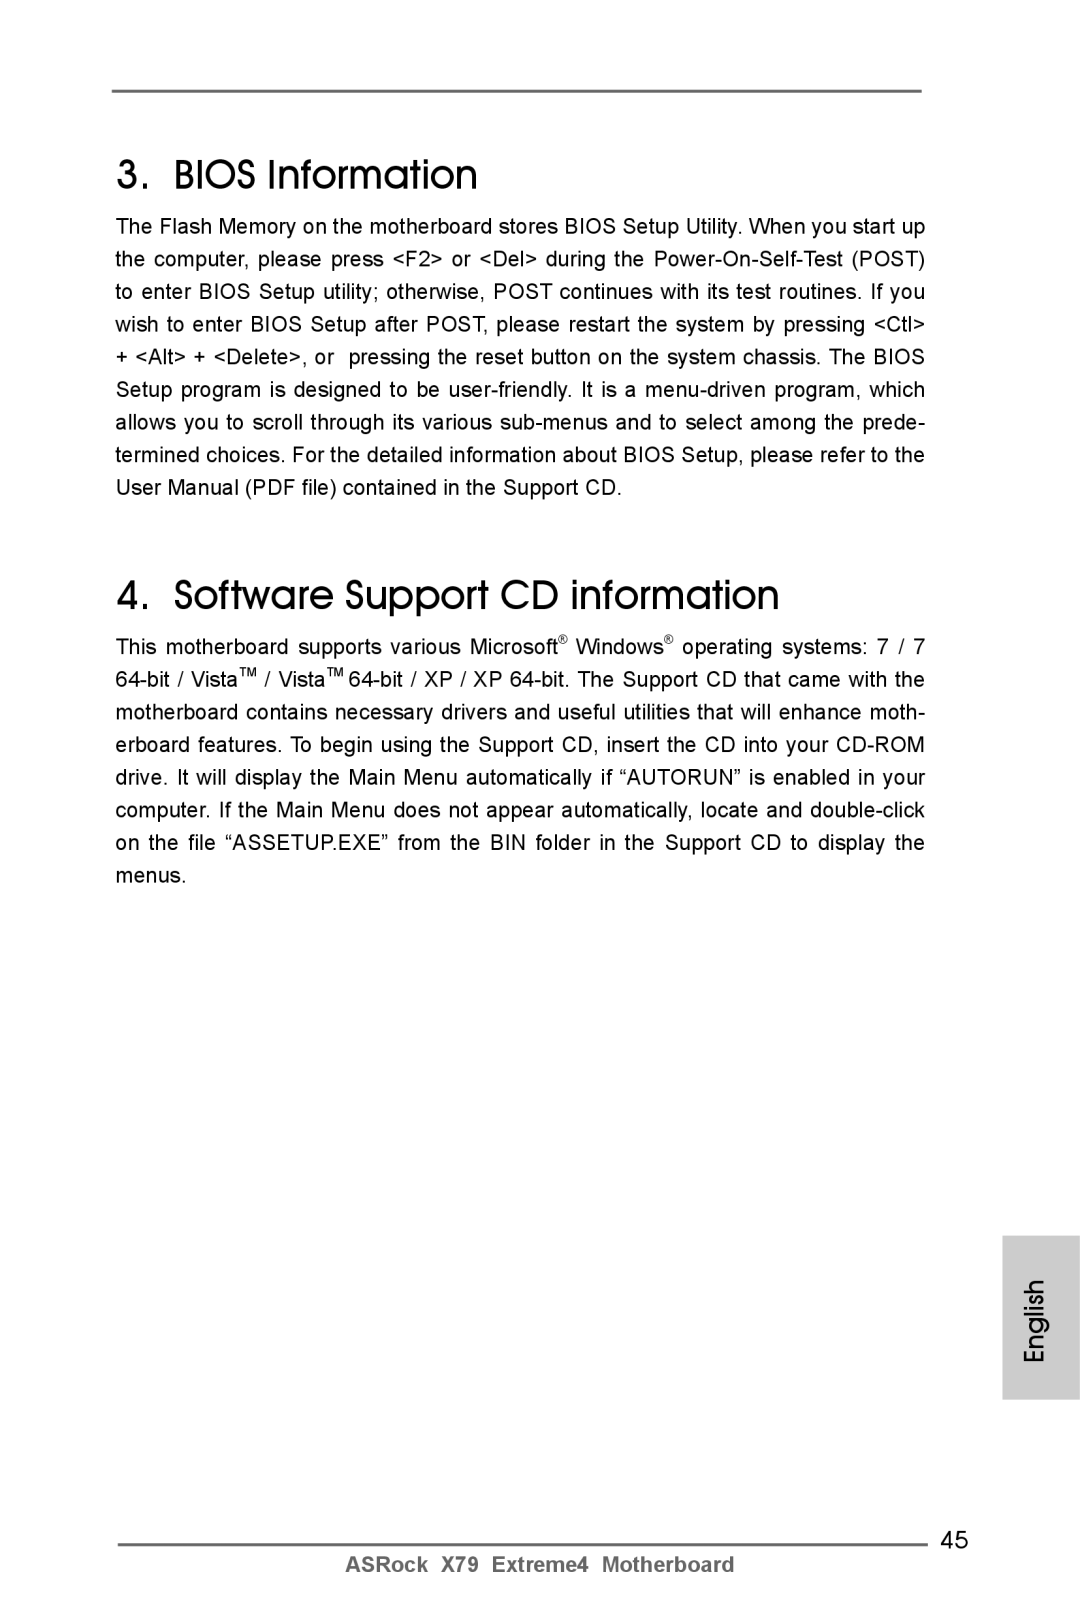 ASRock X79 Extreme4 manual Bios Information 